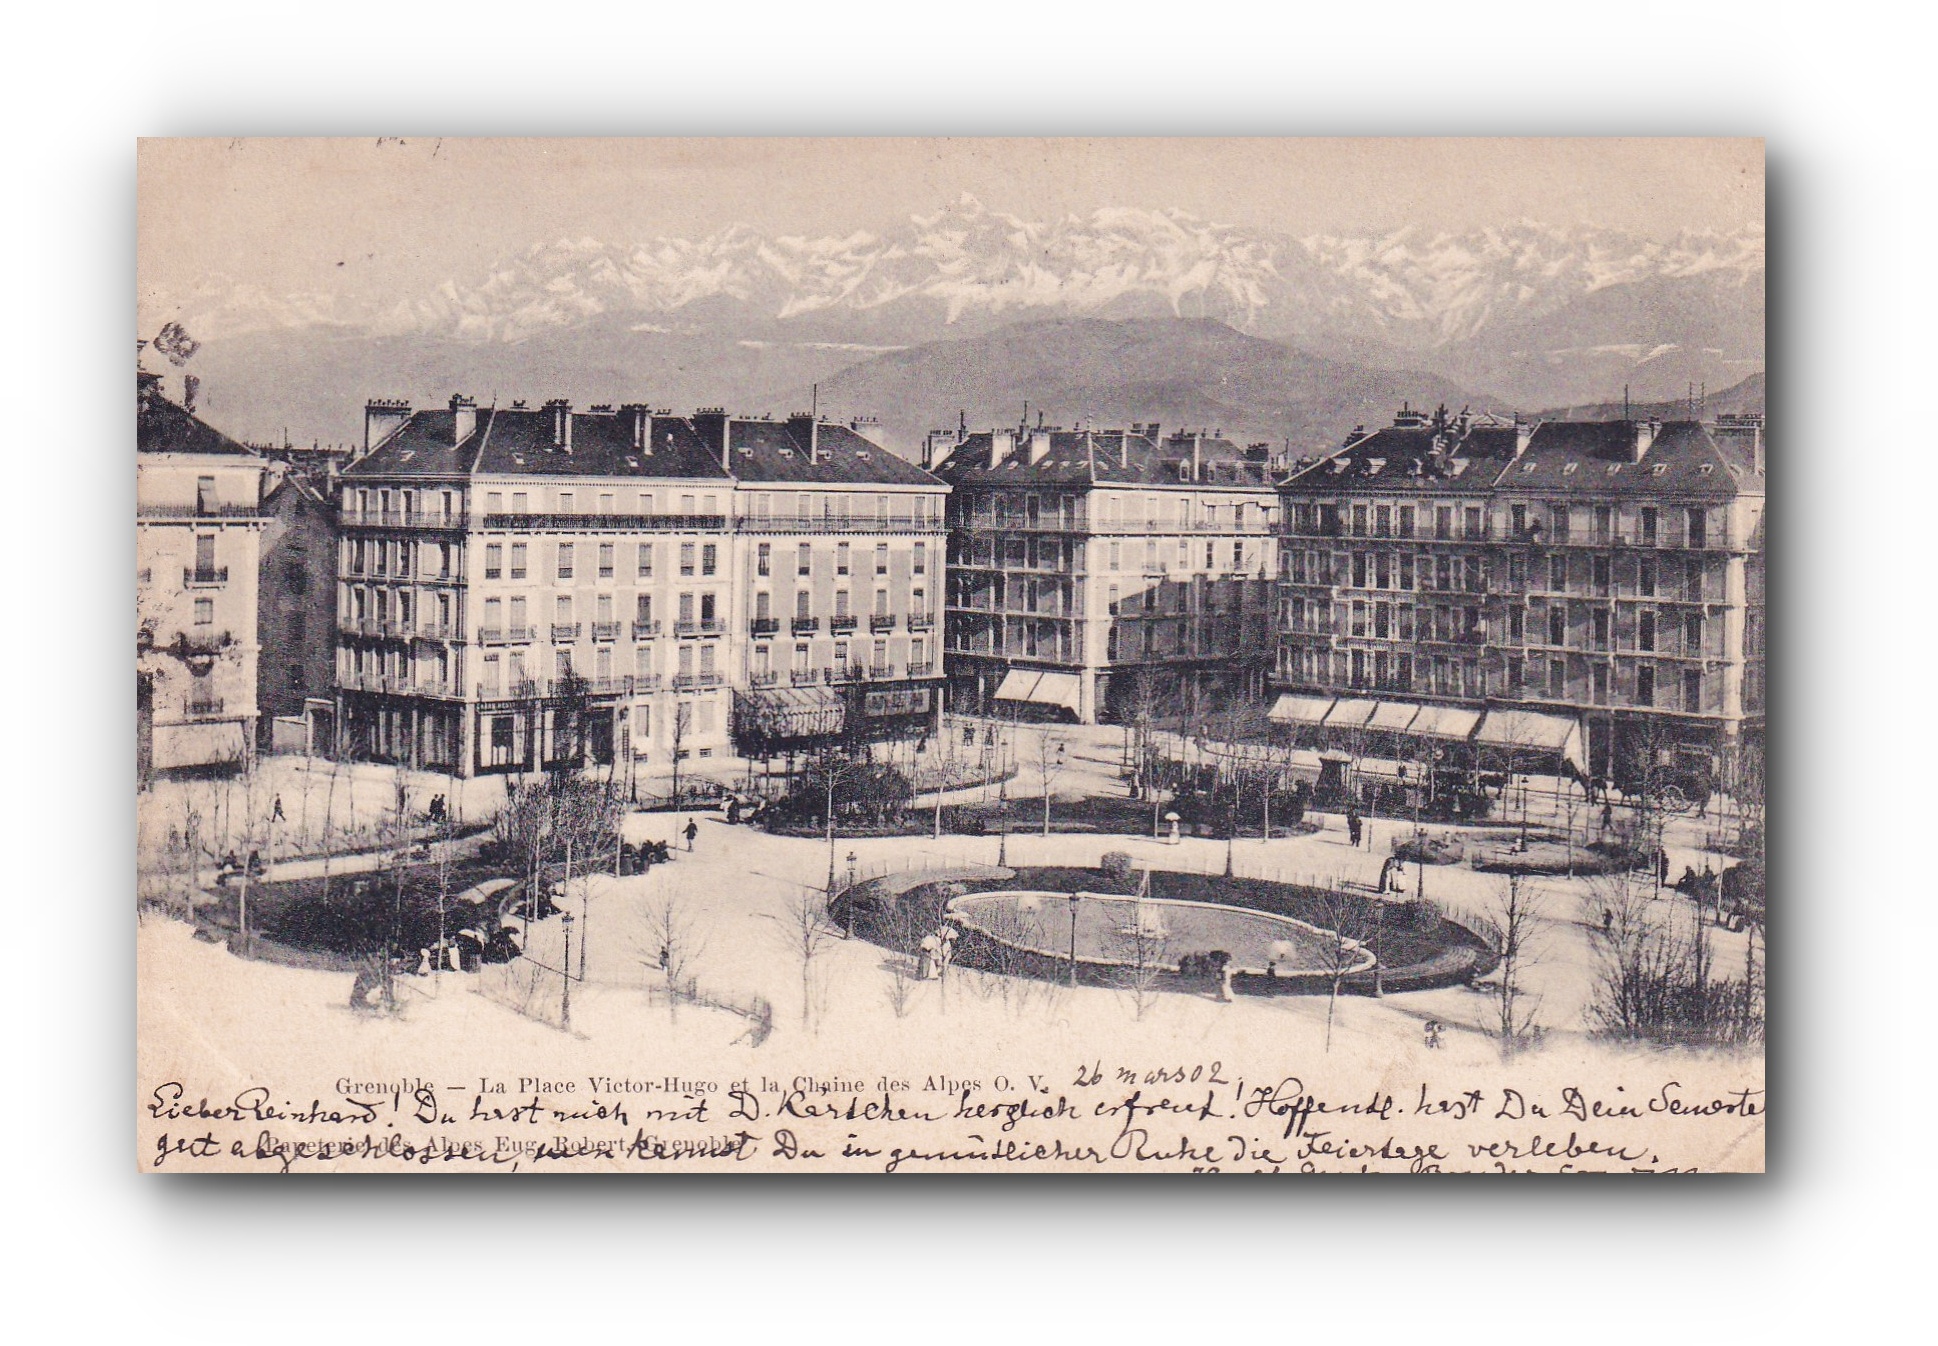 GRENOBLE  - 28.03.1902 - Place Victor Hugo et les Alpes - Der Platz Victor Hugo und die Alpen - Place Victor Hugo and the Alps